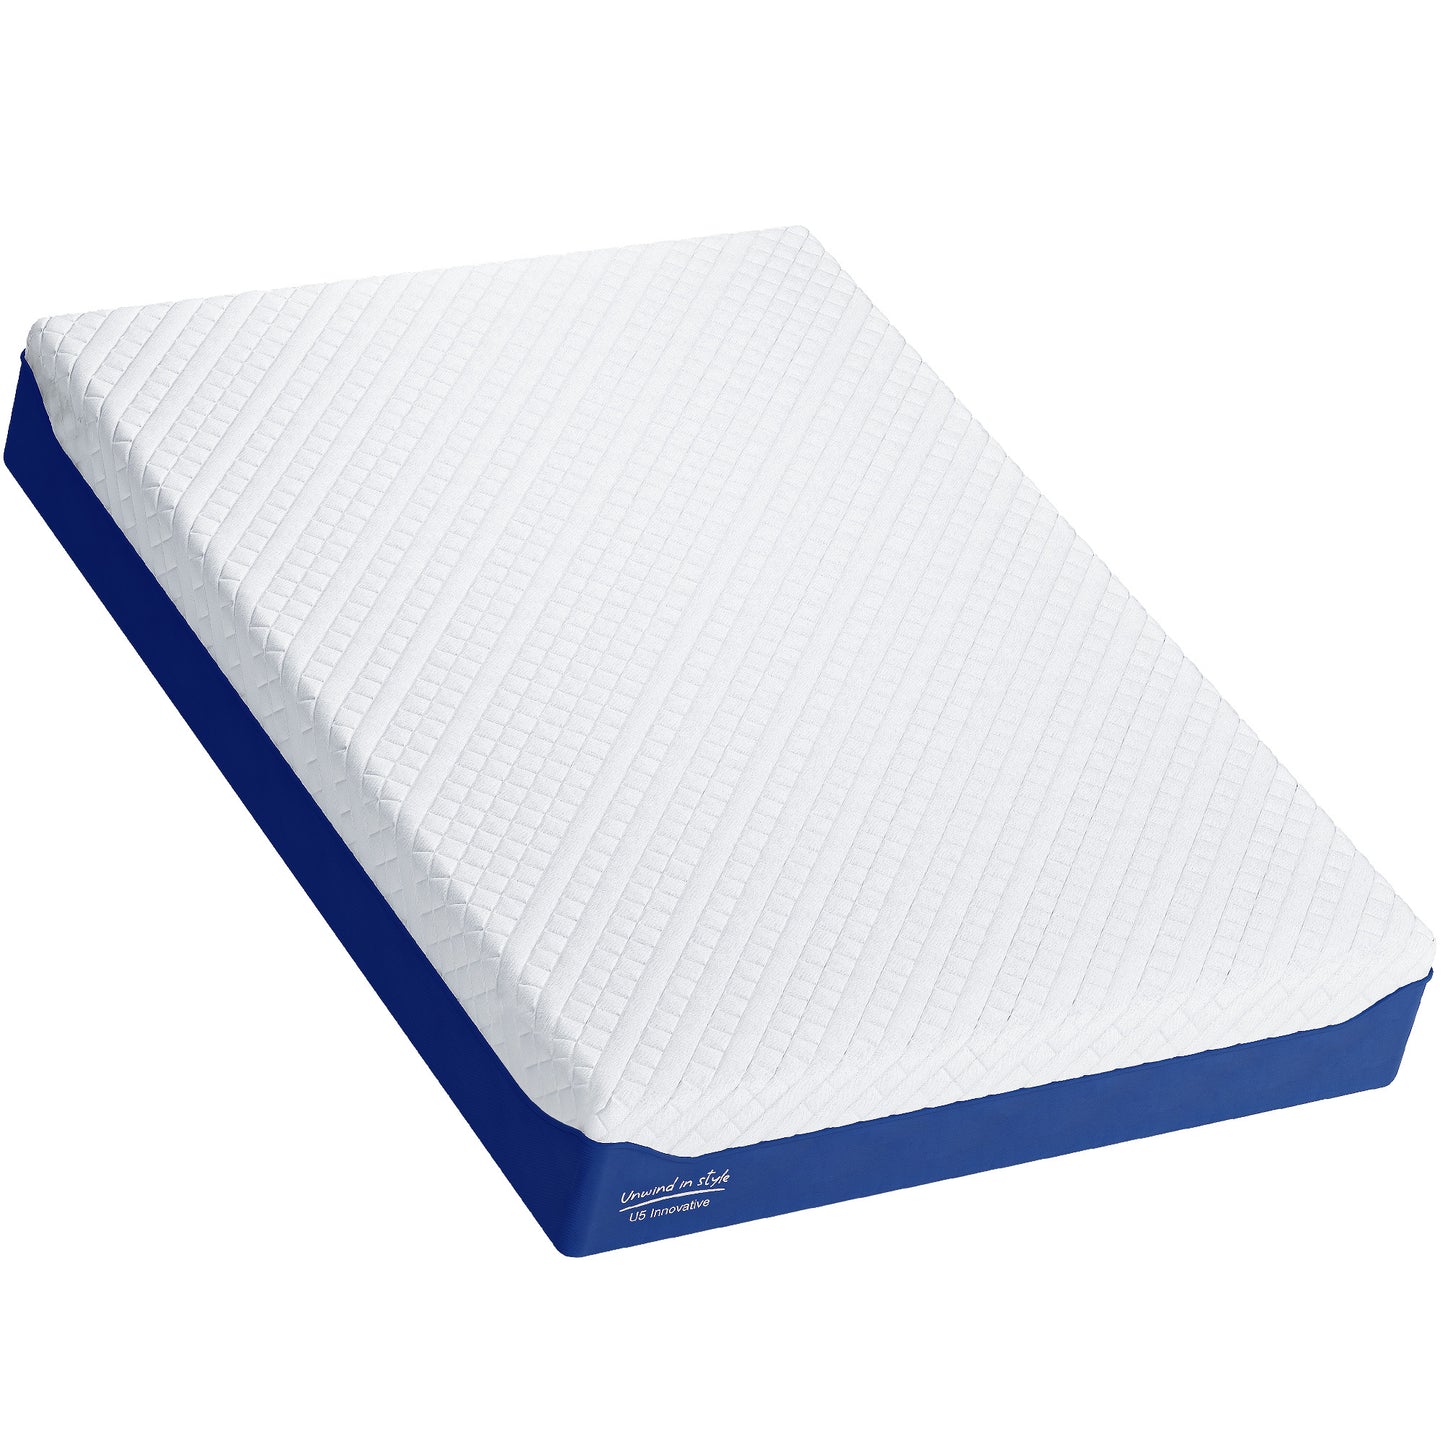 SogesPower 12inches Thickness Hybrid Mattress Gel Memory Foam- Queen， White+Blue